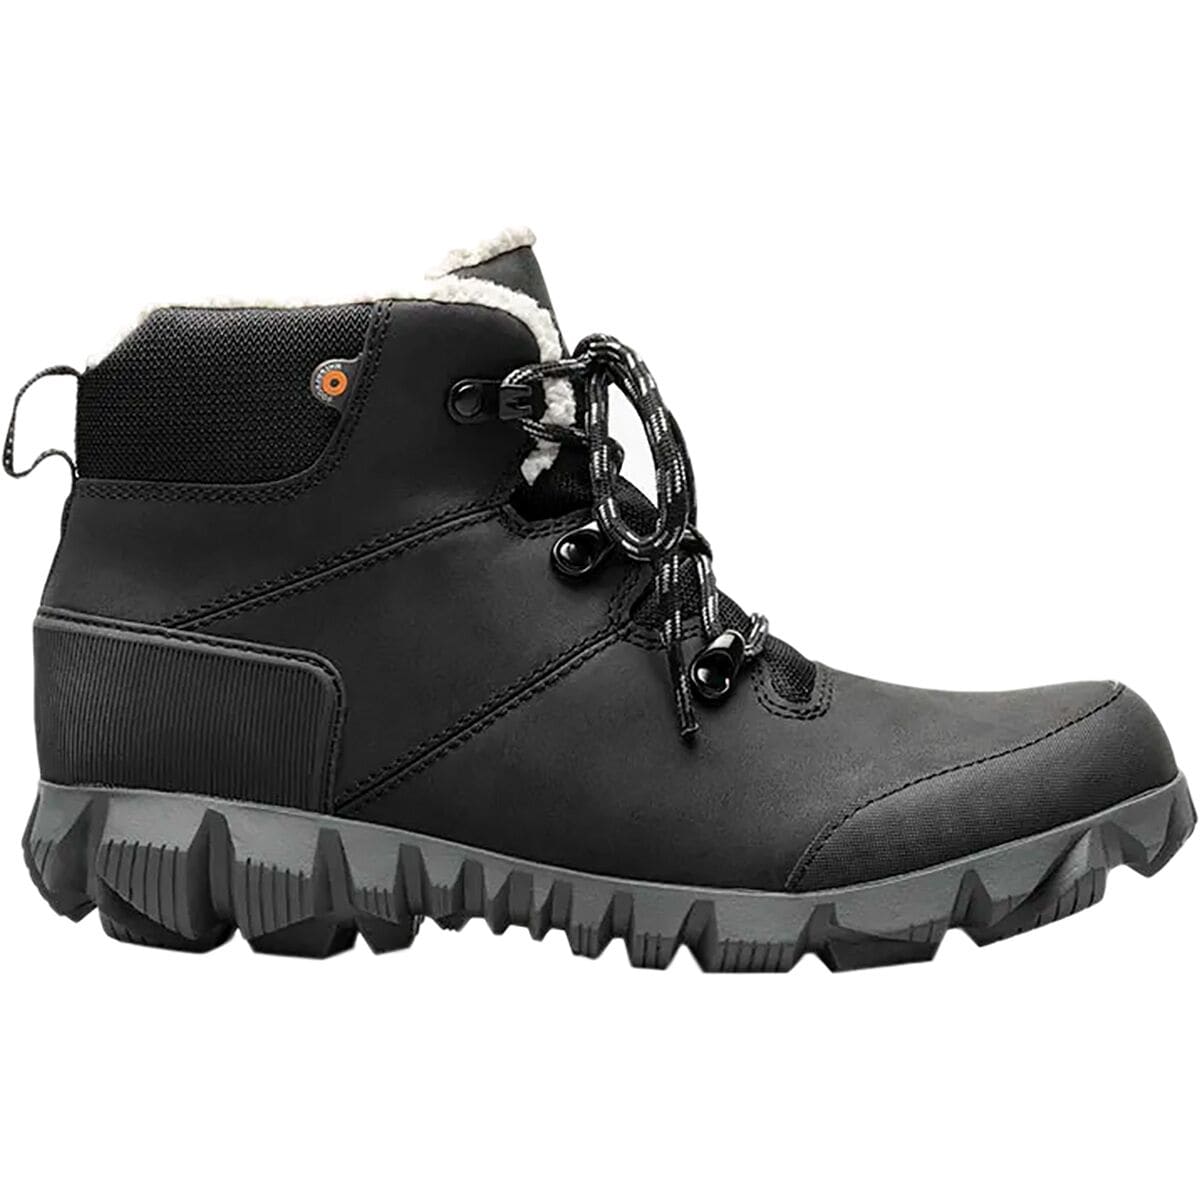 Arcata Urban Leather Mid Boot - Women